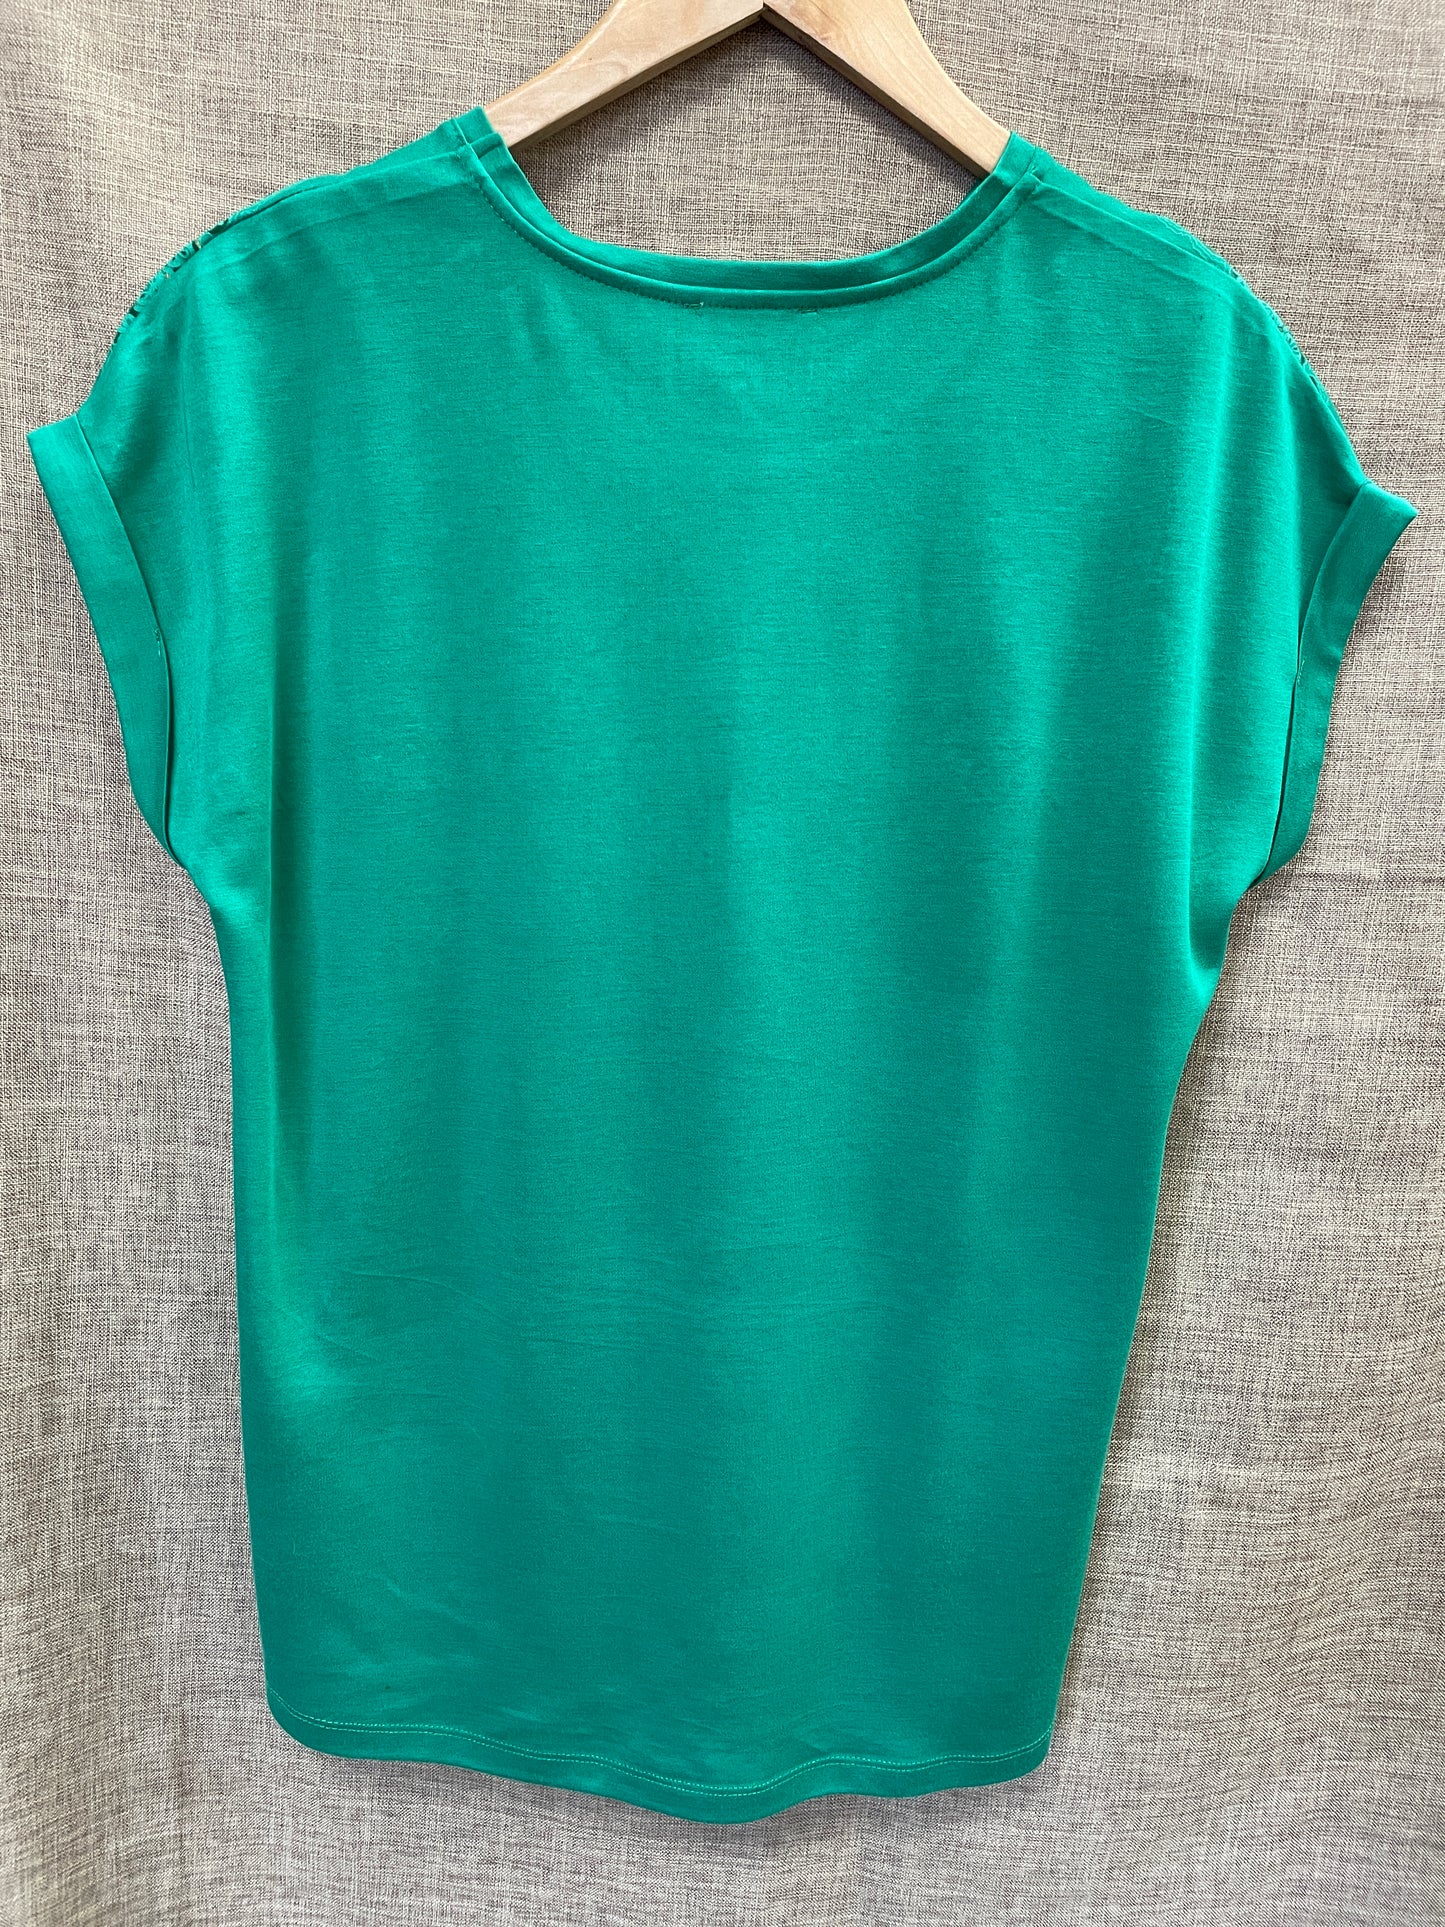 Leo & Ugo Green Lace Front T-Shirt Top Size 3 UK 14